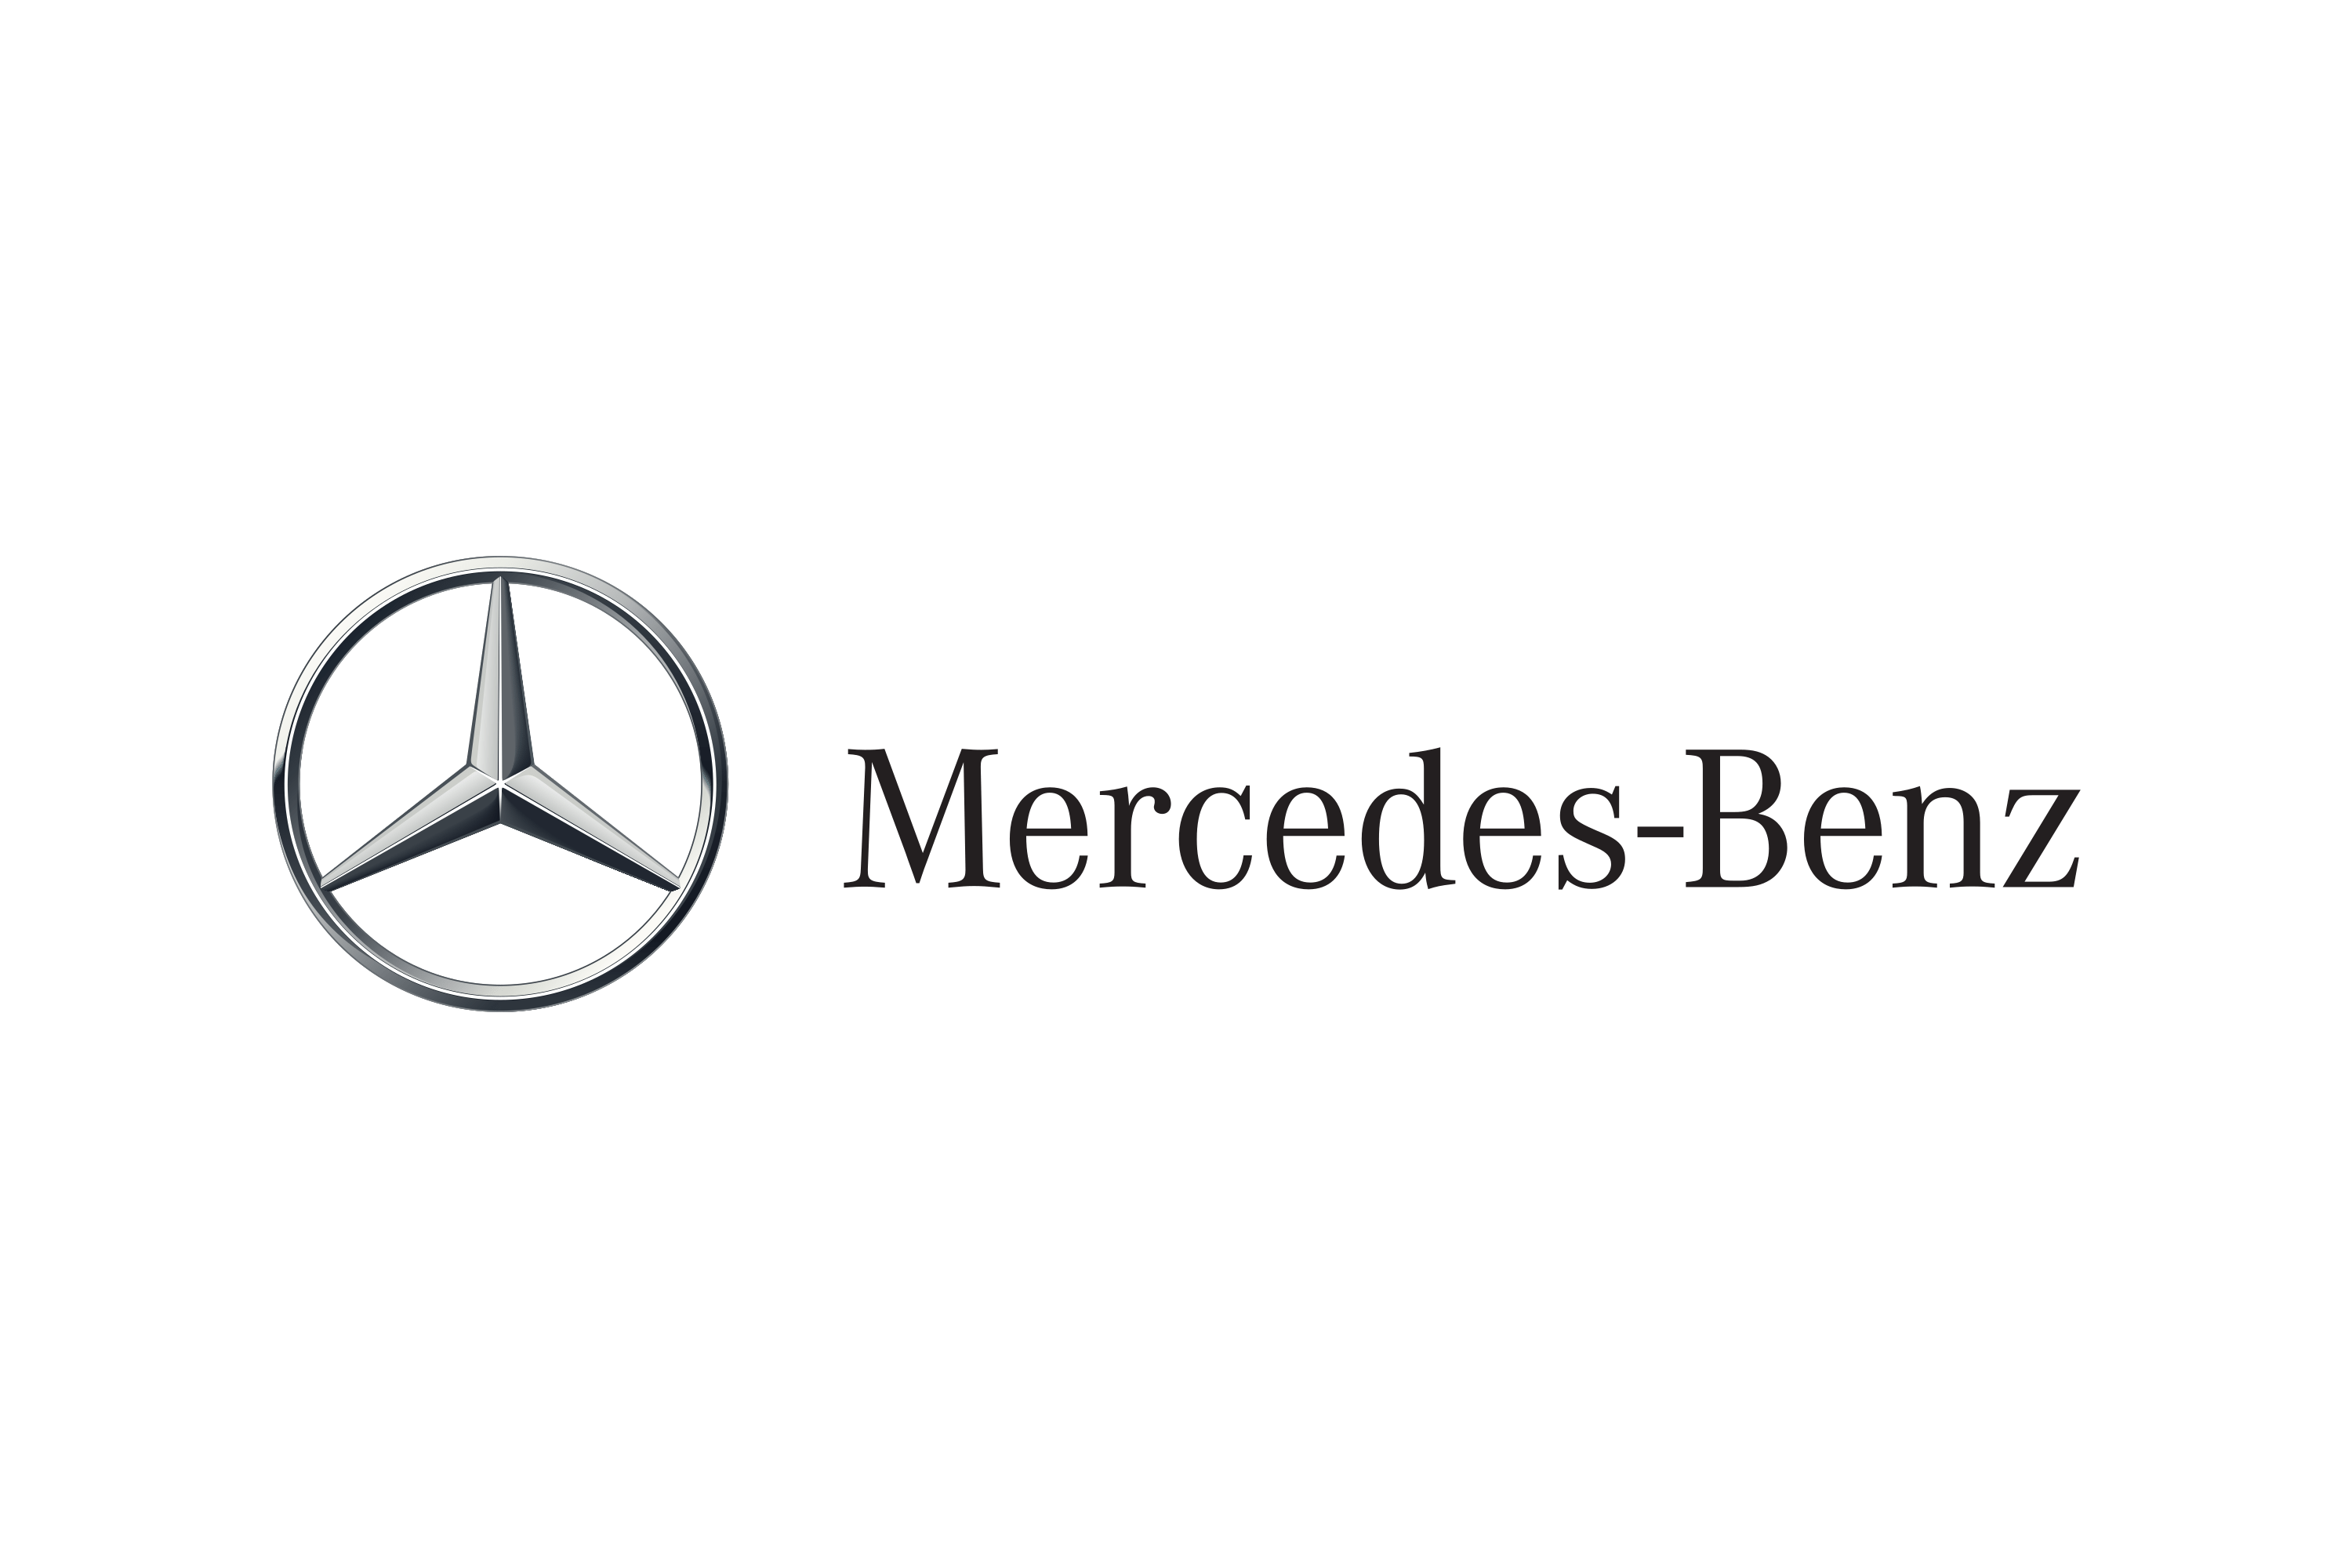 Download Mercedes-Benz USA (MBUSA) Logo in SVG Vector or PNG File Format 